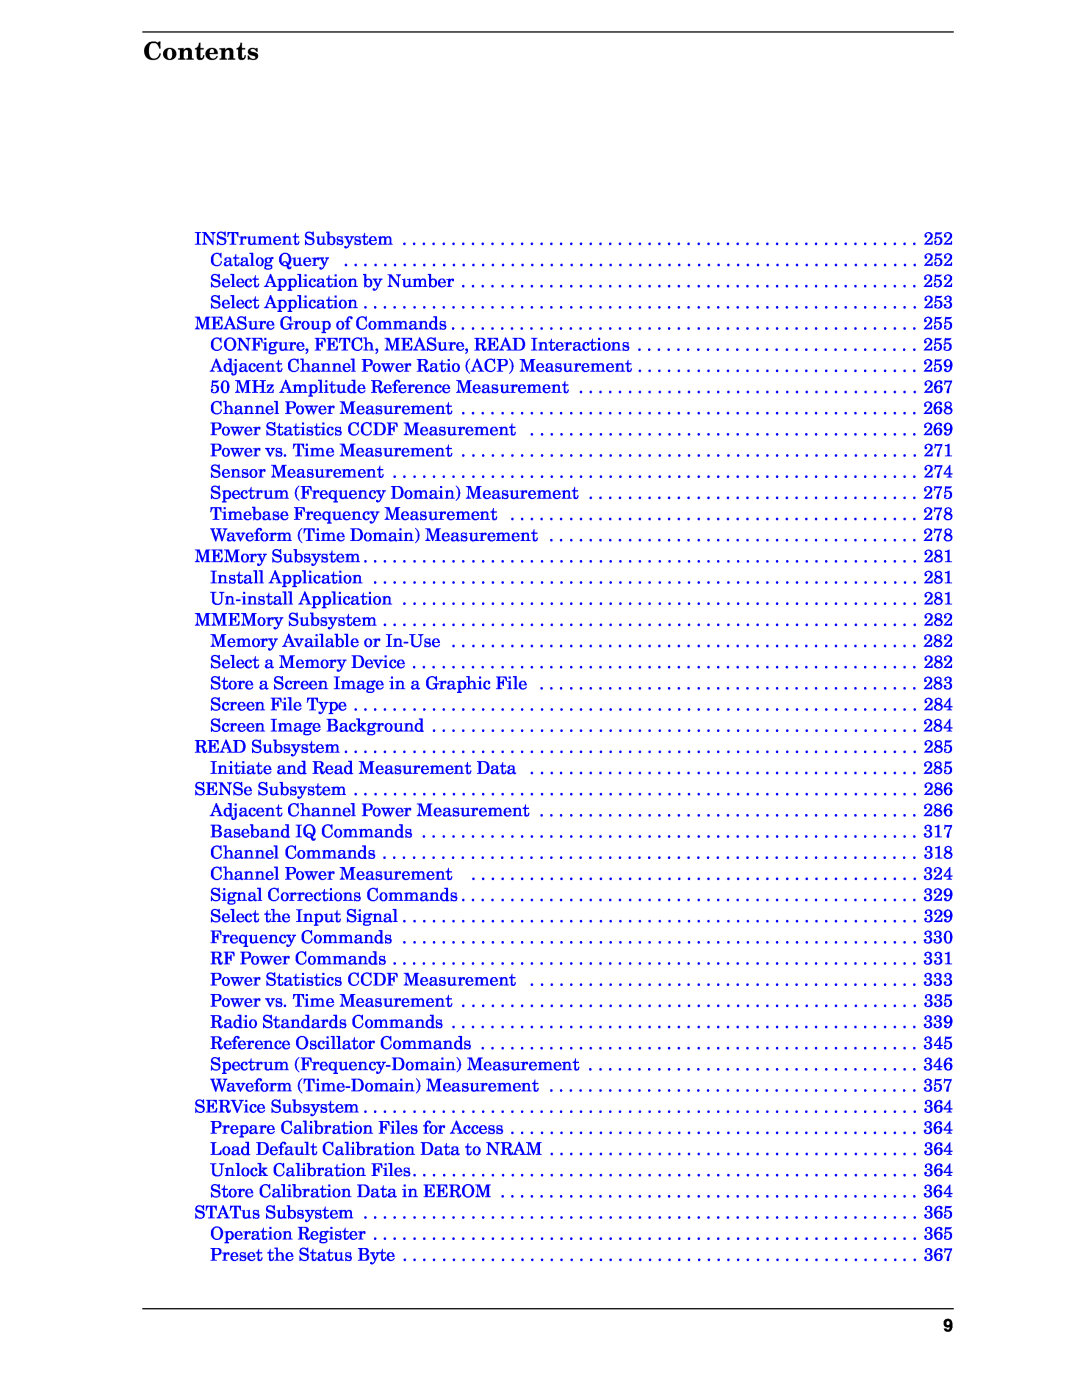 Agilent Technologies E4406A VSA manual Contents 